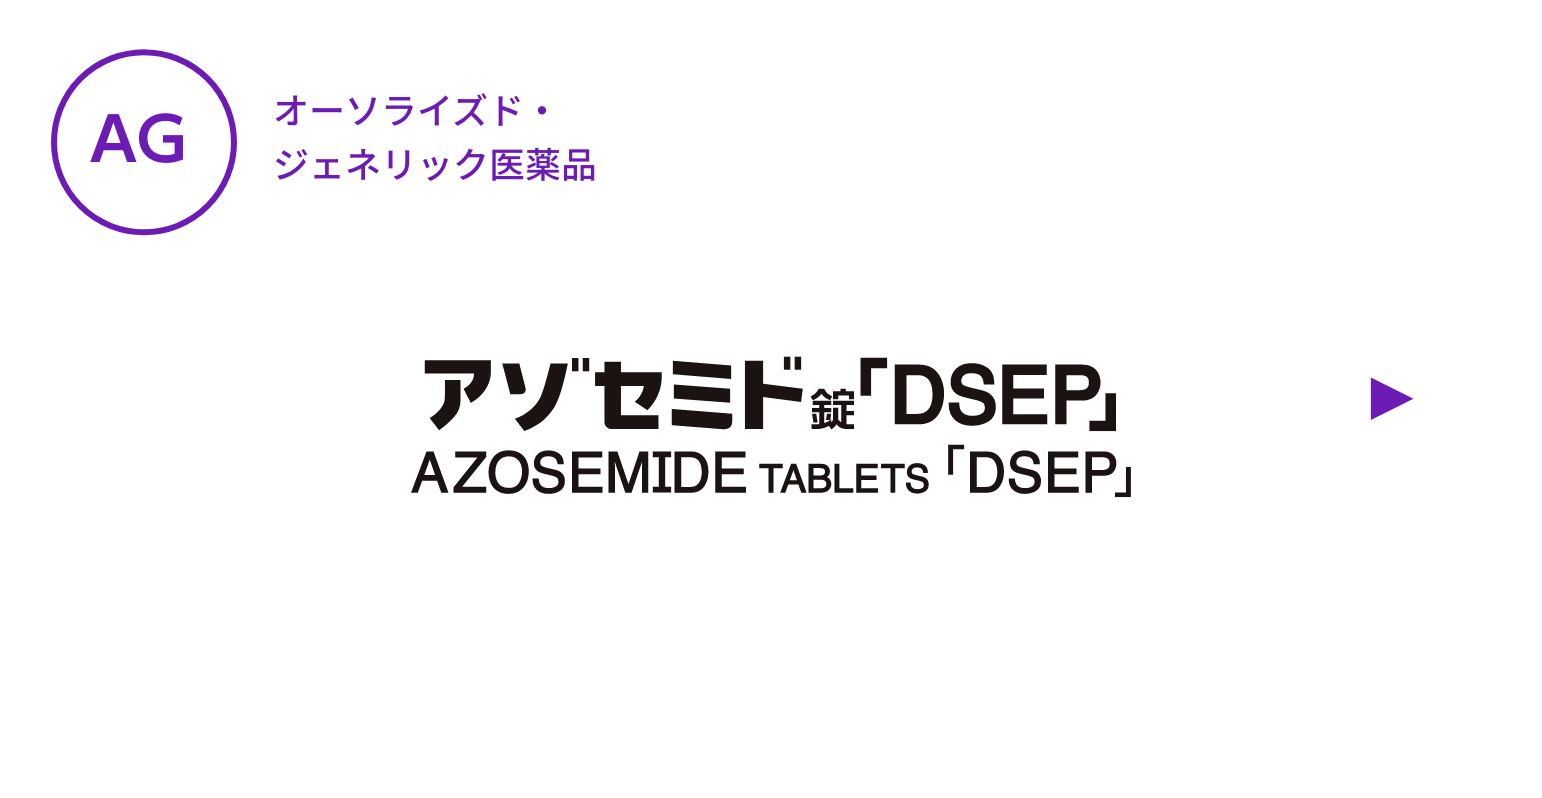 【AG】アゾセミド錠「DSEP」